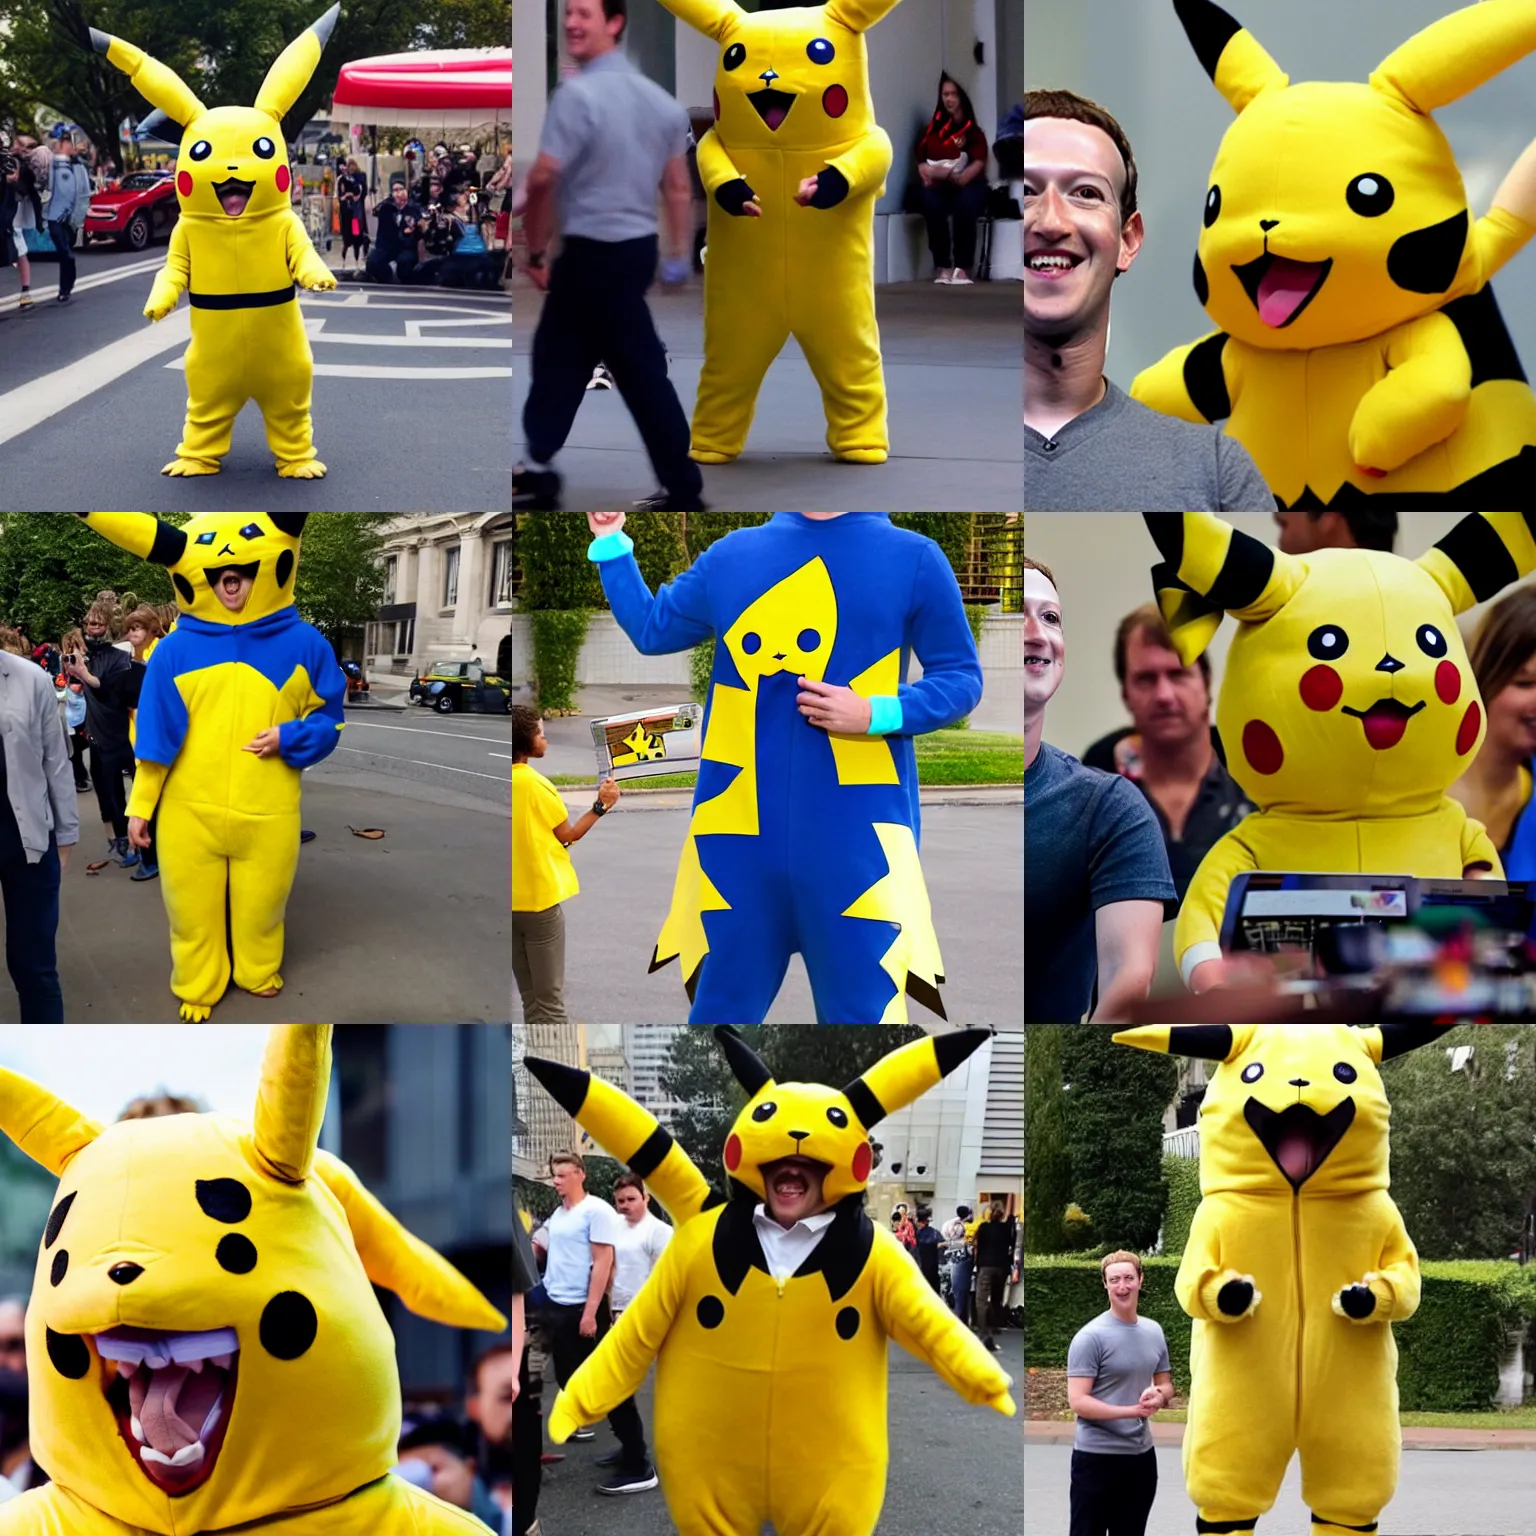 Prompt: Mark Zuckerberg wearing a Pikachu costume